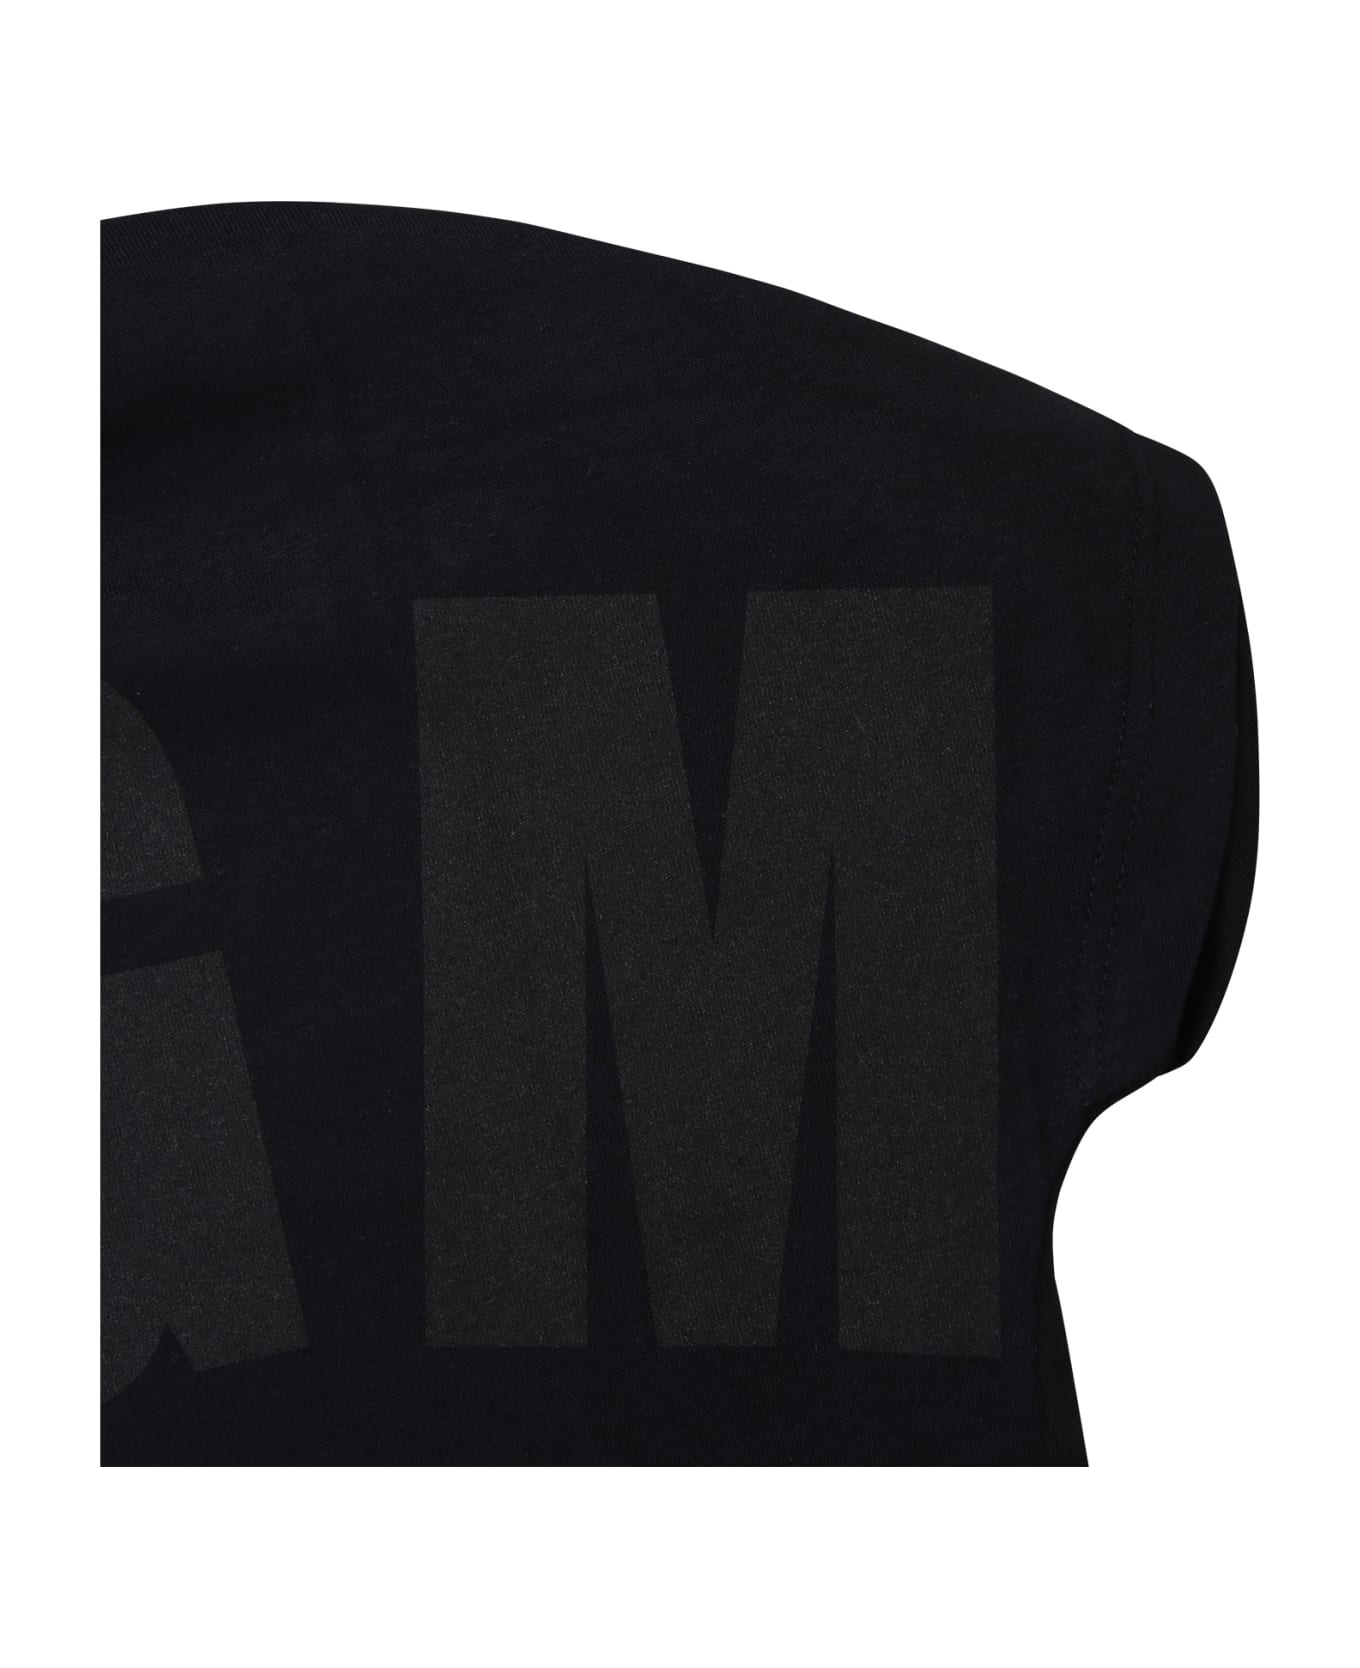 MSGM Black T-shirt For Kids With Logo - Black